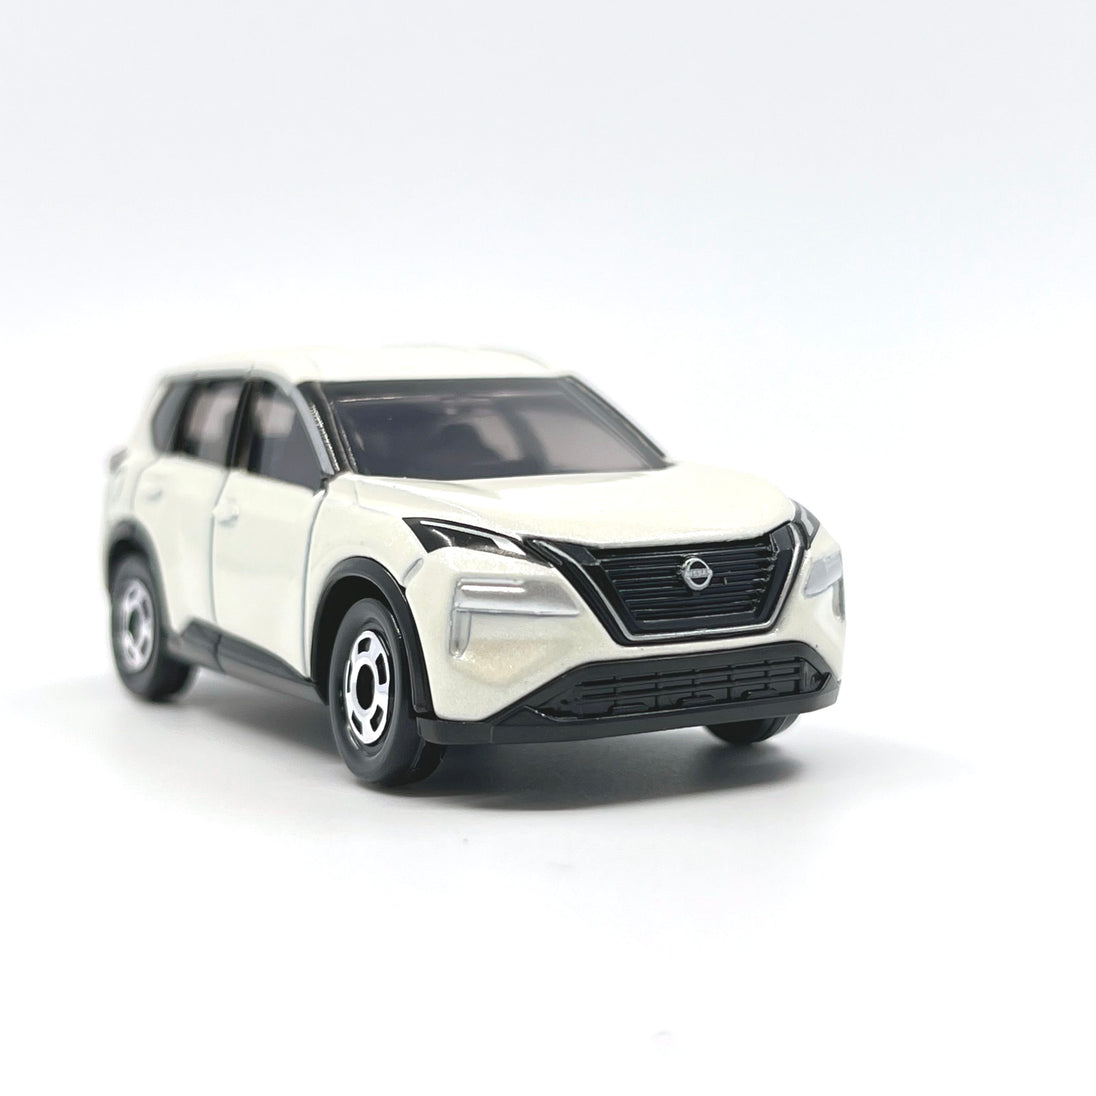 1:63 Nissan X-Trail Alloy Tomica Diecast Car Model by Takara Tomy